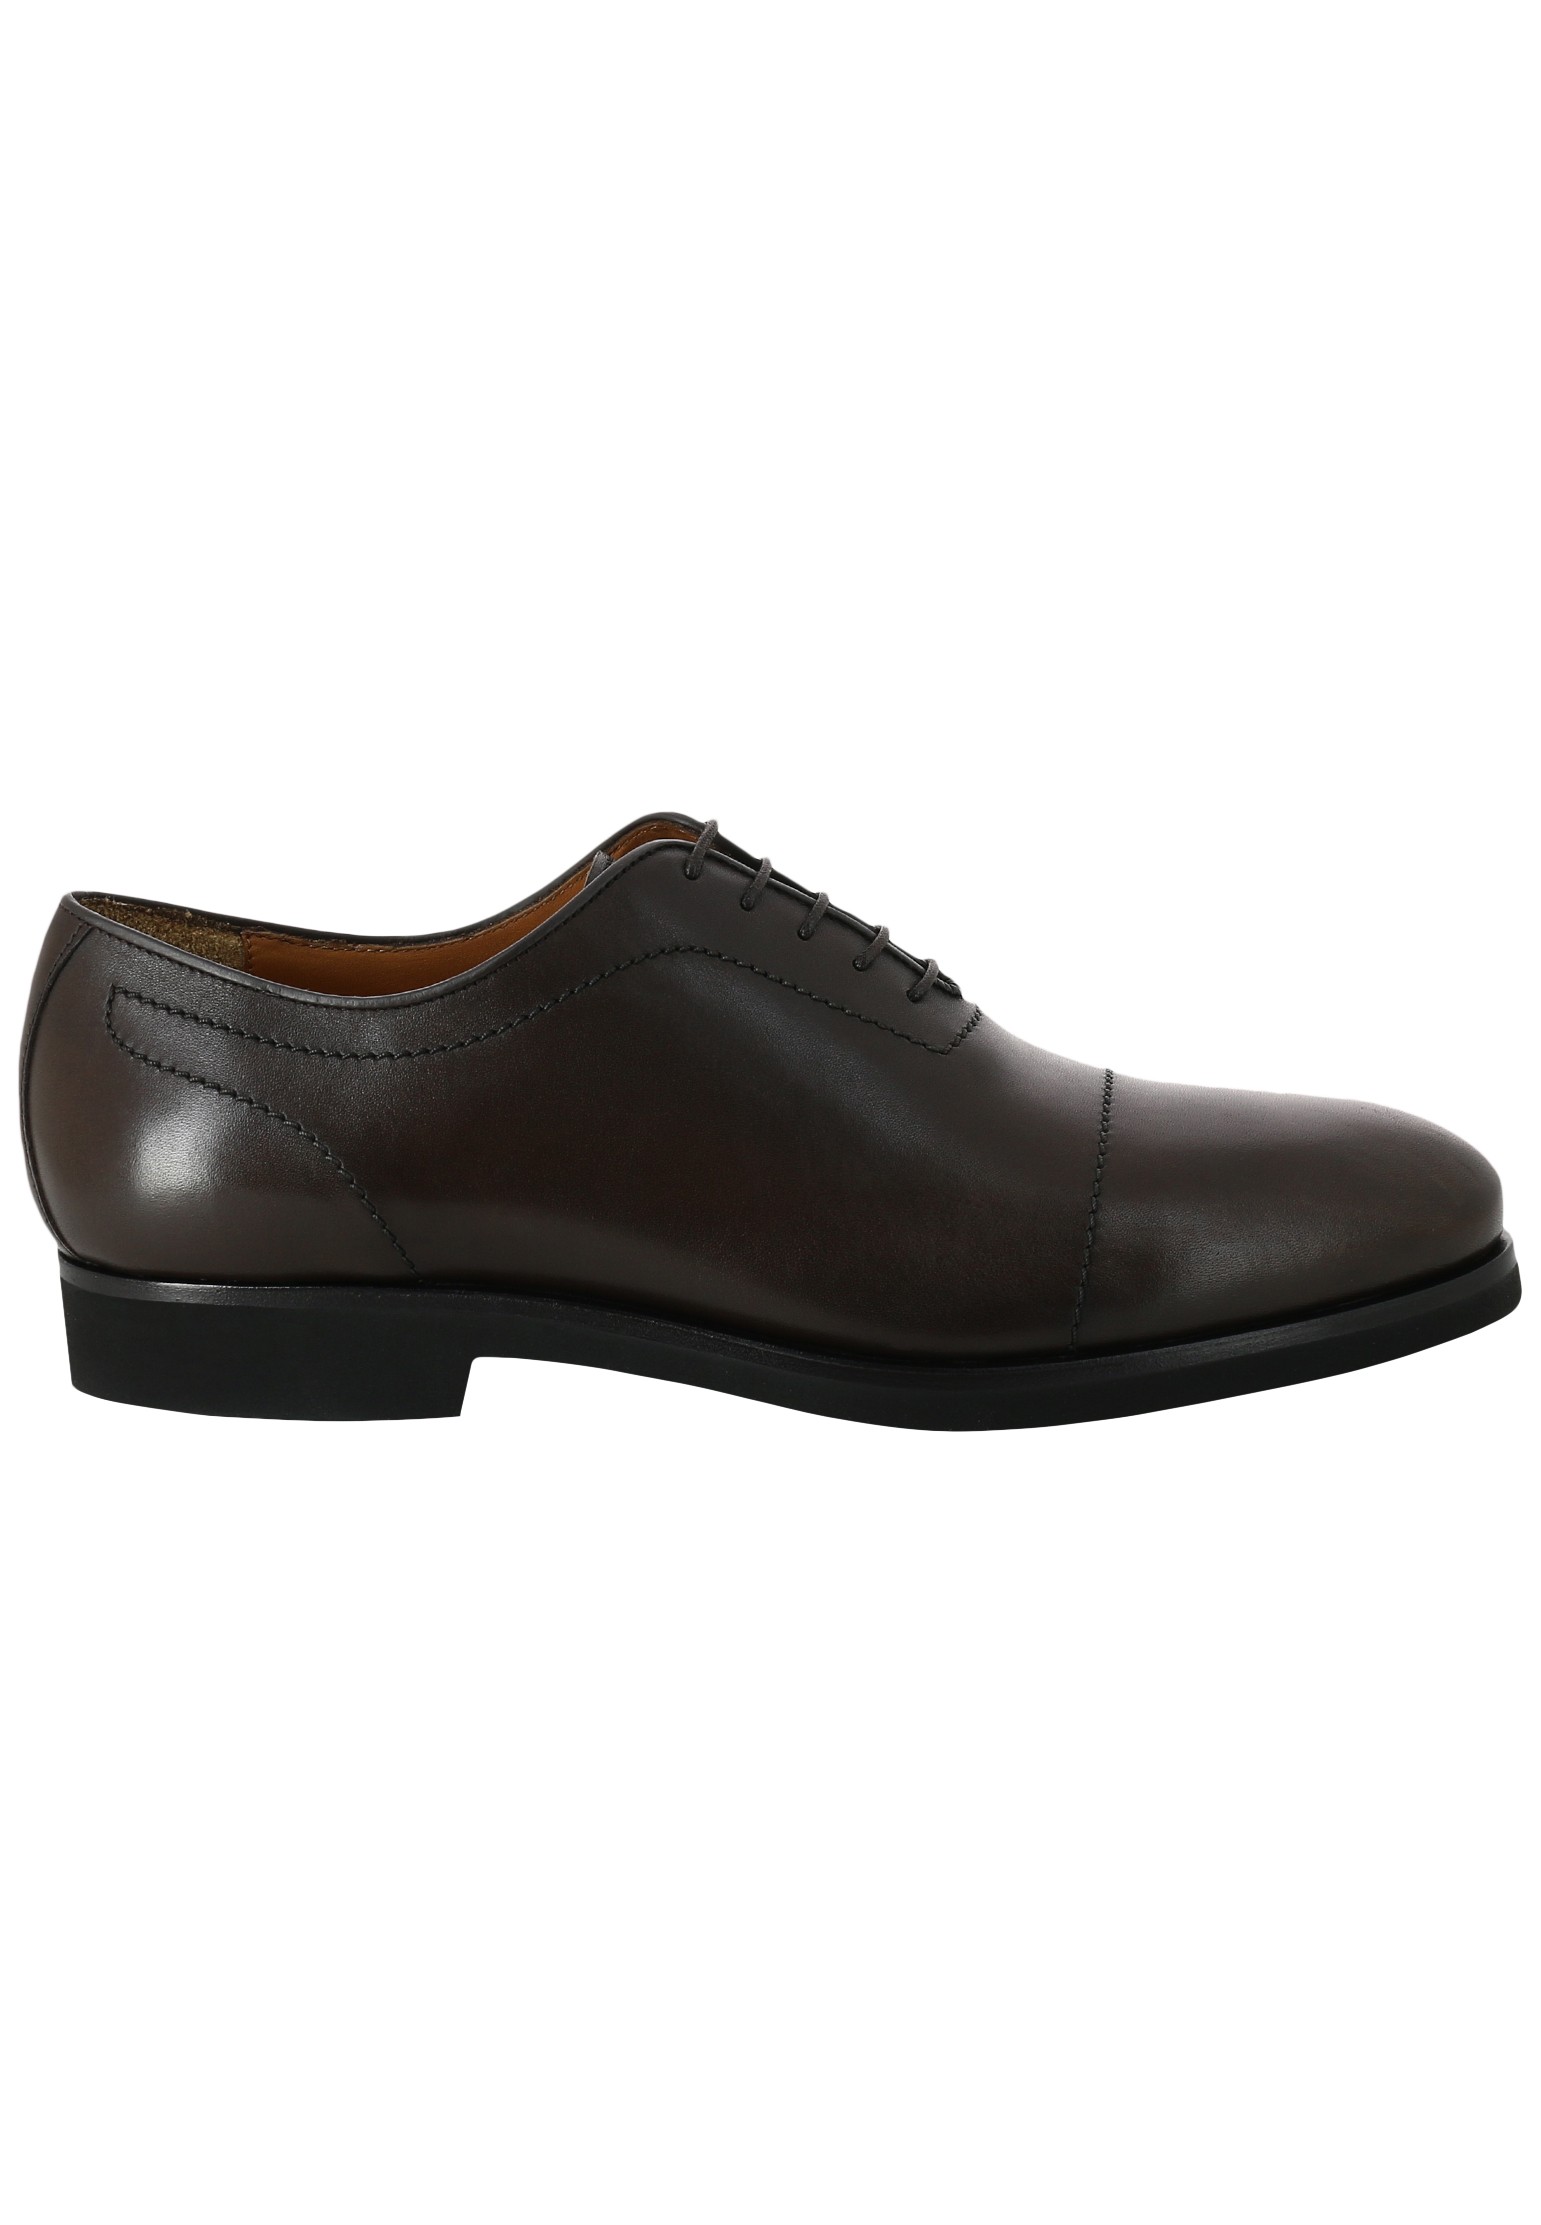 мужские ботинки-оксфорды castello d’oro, коричневые